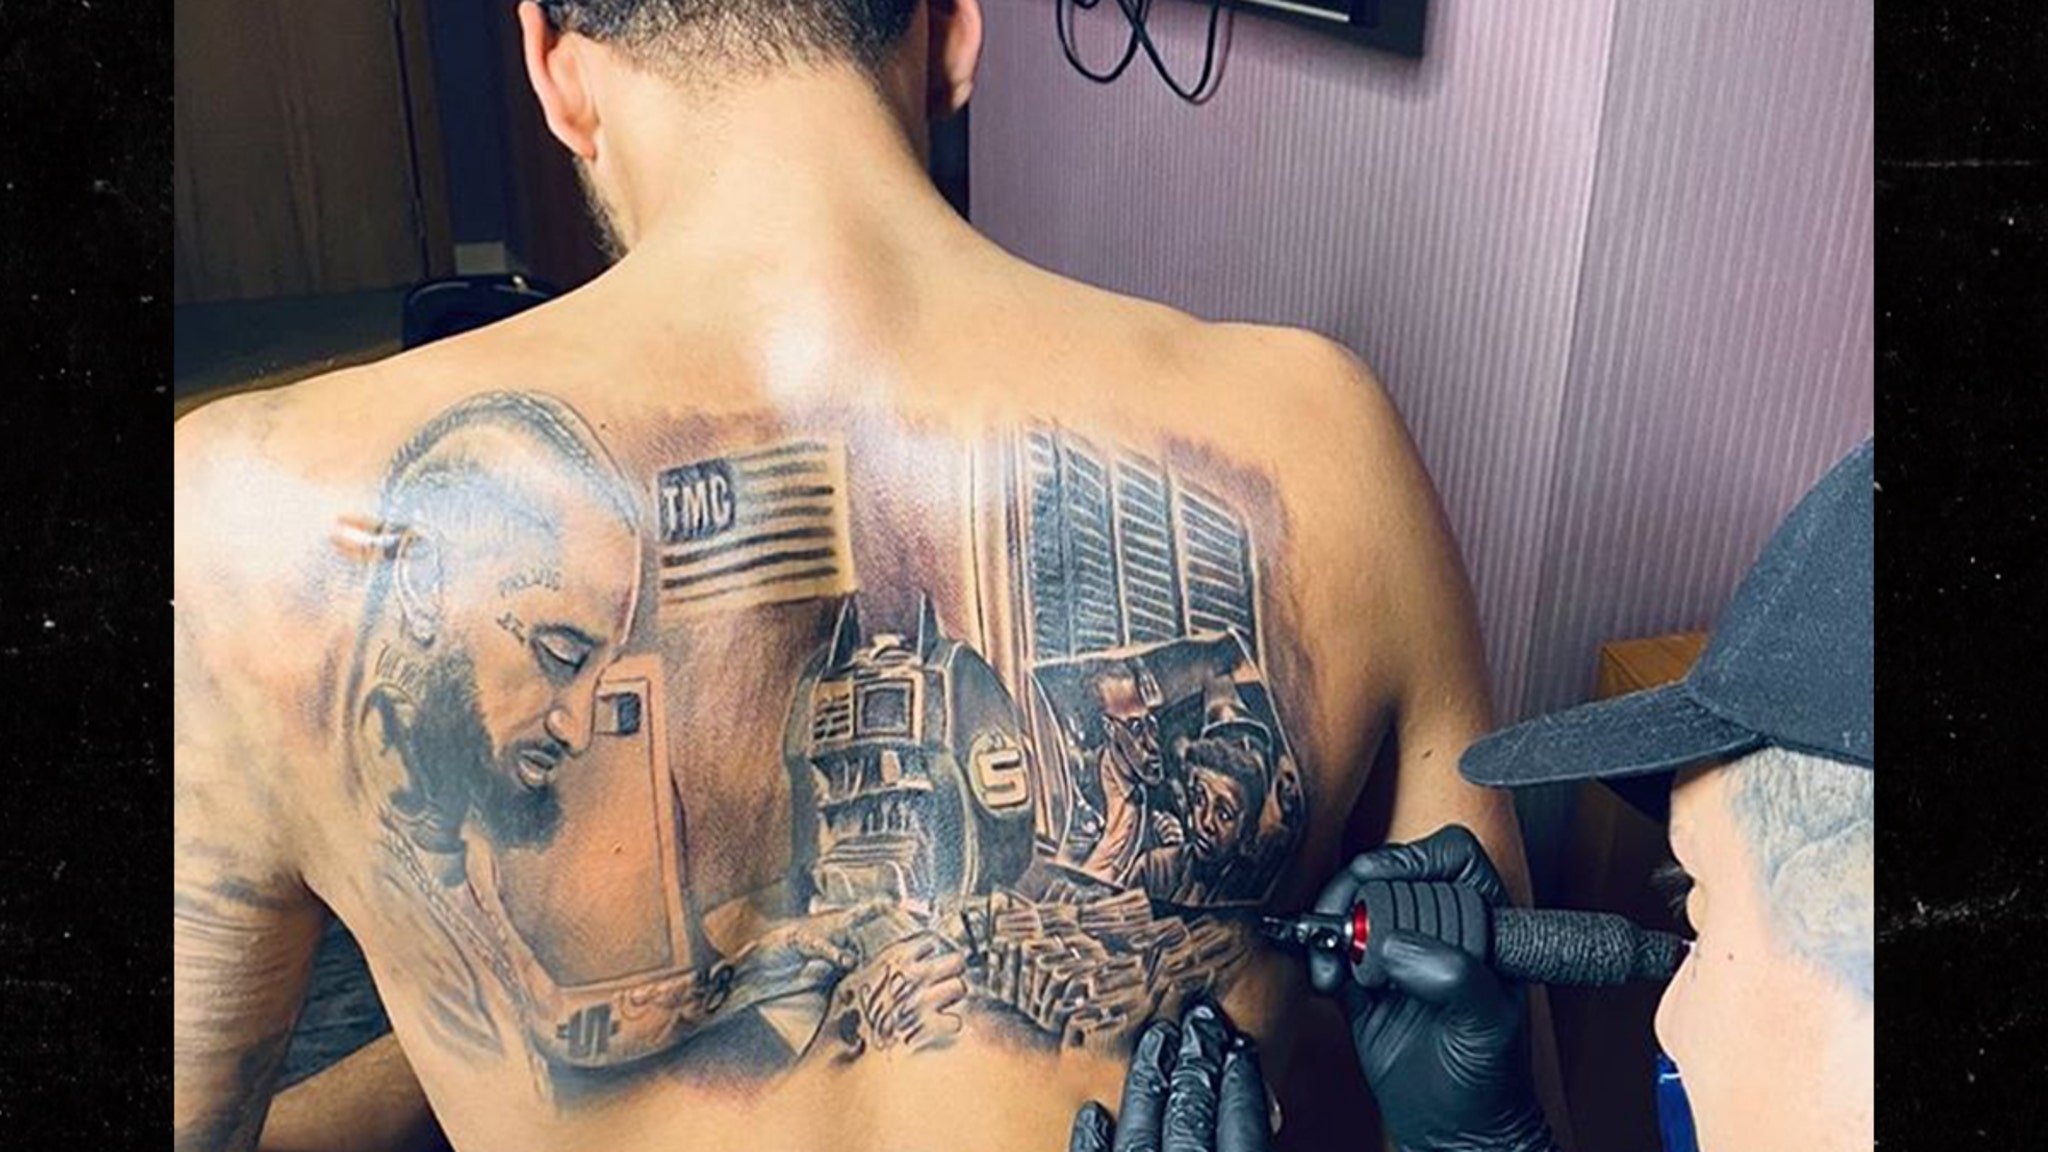 Nipsey hussle inspired tattoo  Wrist tattoos for guys Arm tattoos for guys  Tattoos for guys